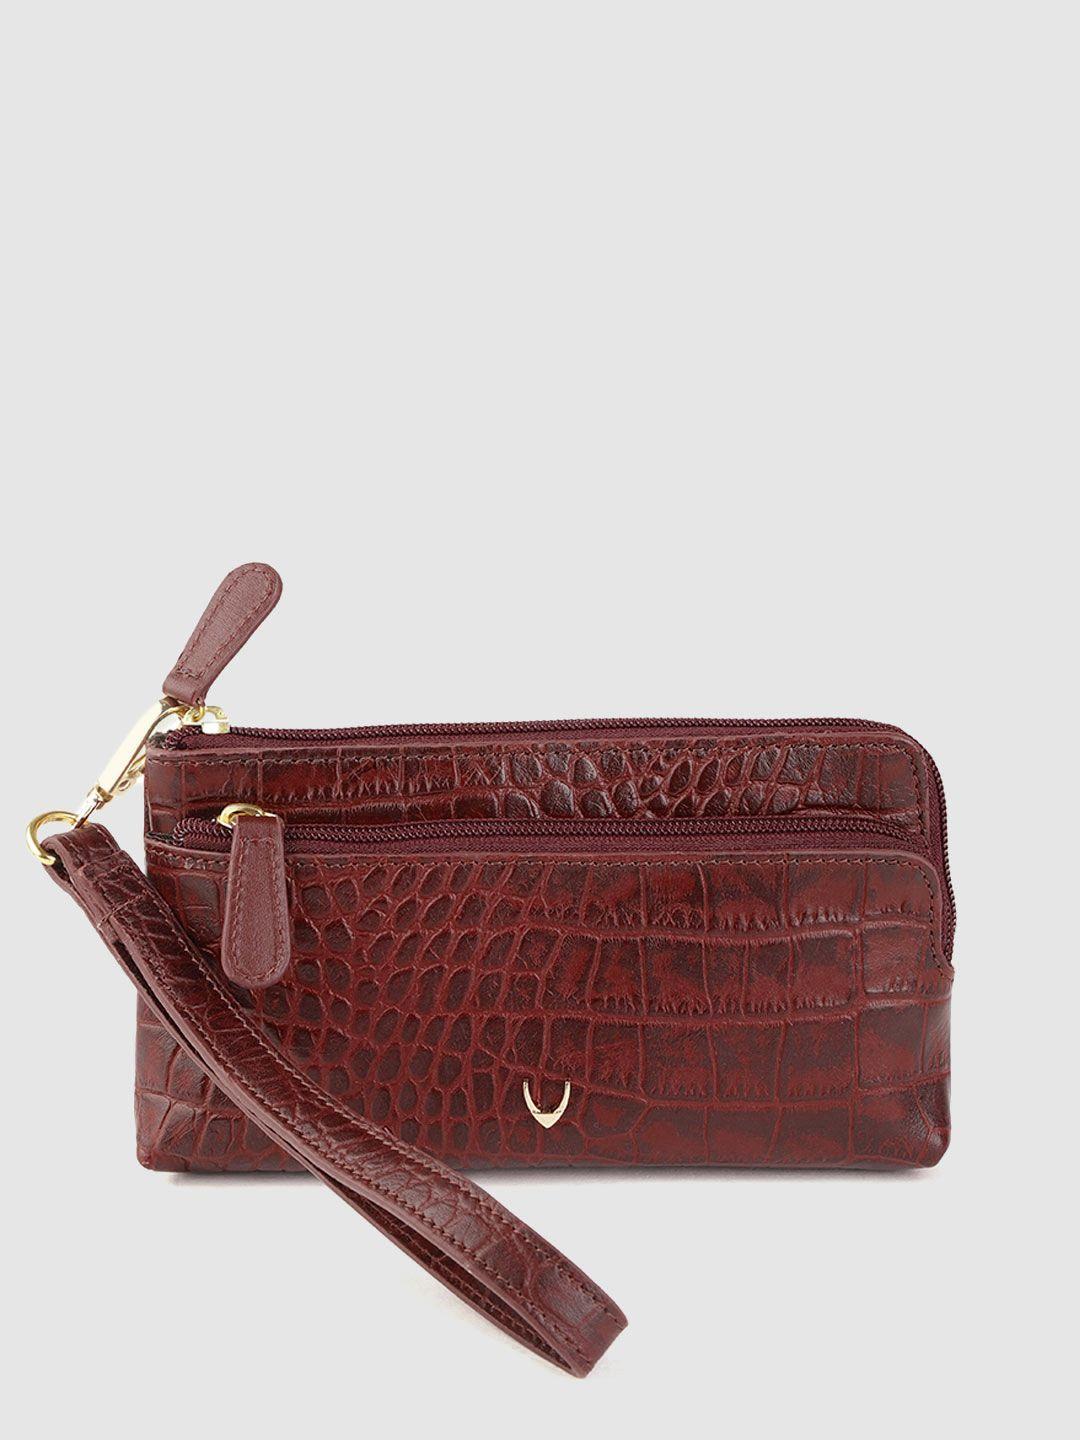 hidesign maroon croc textured purse with detachable wrist loop